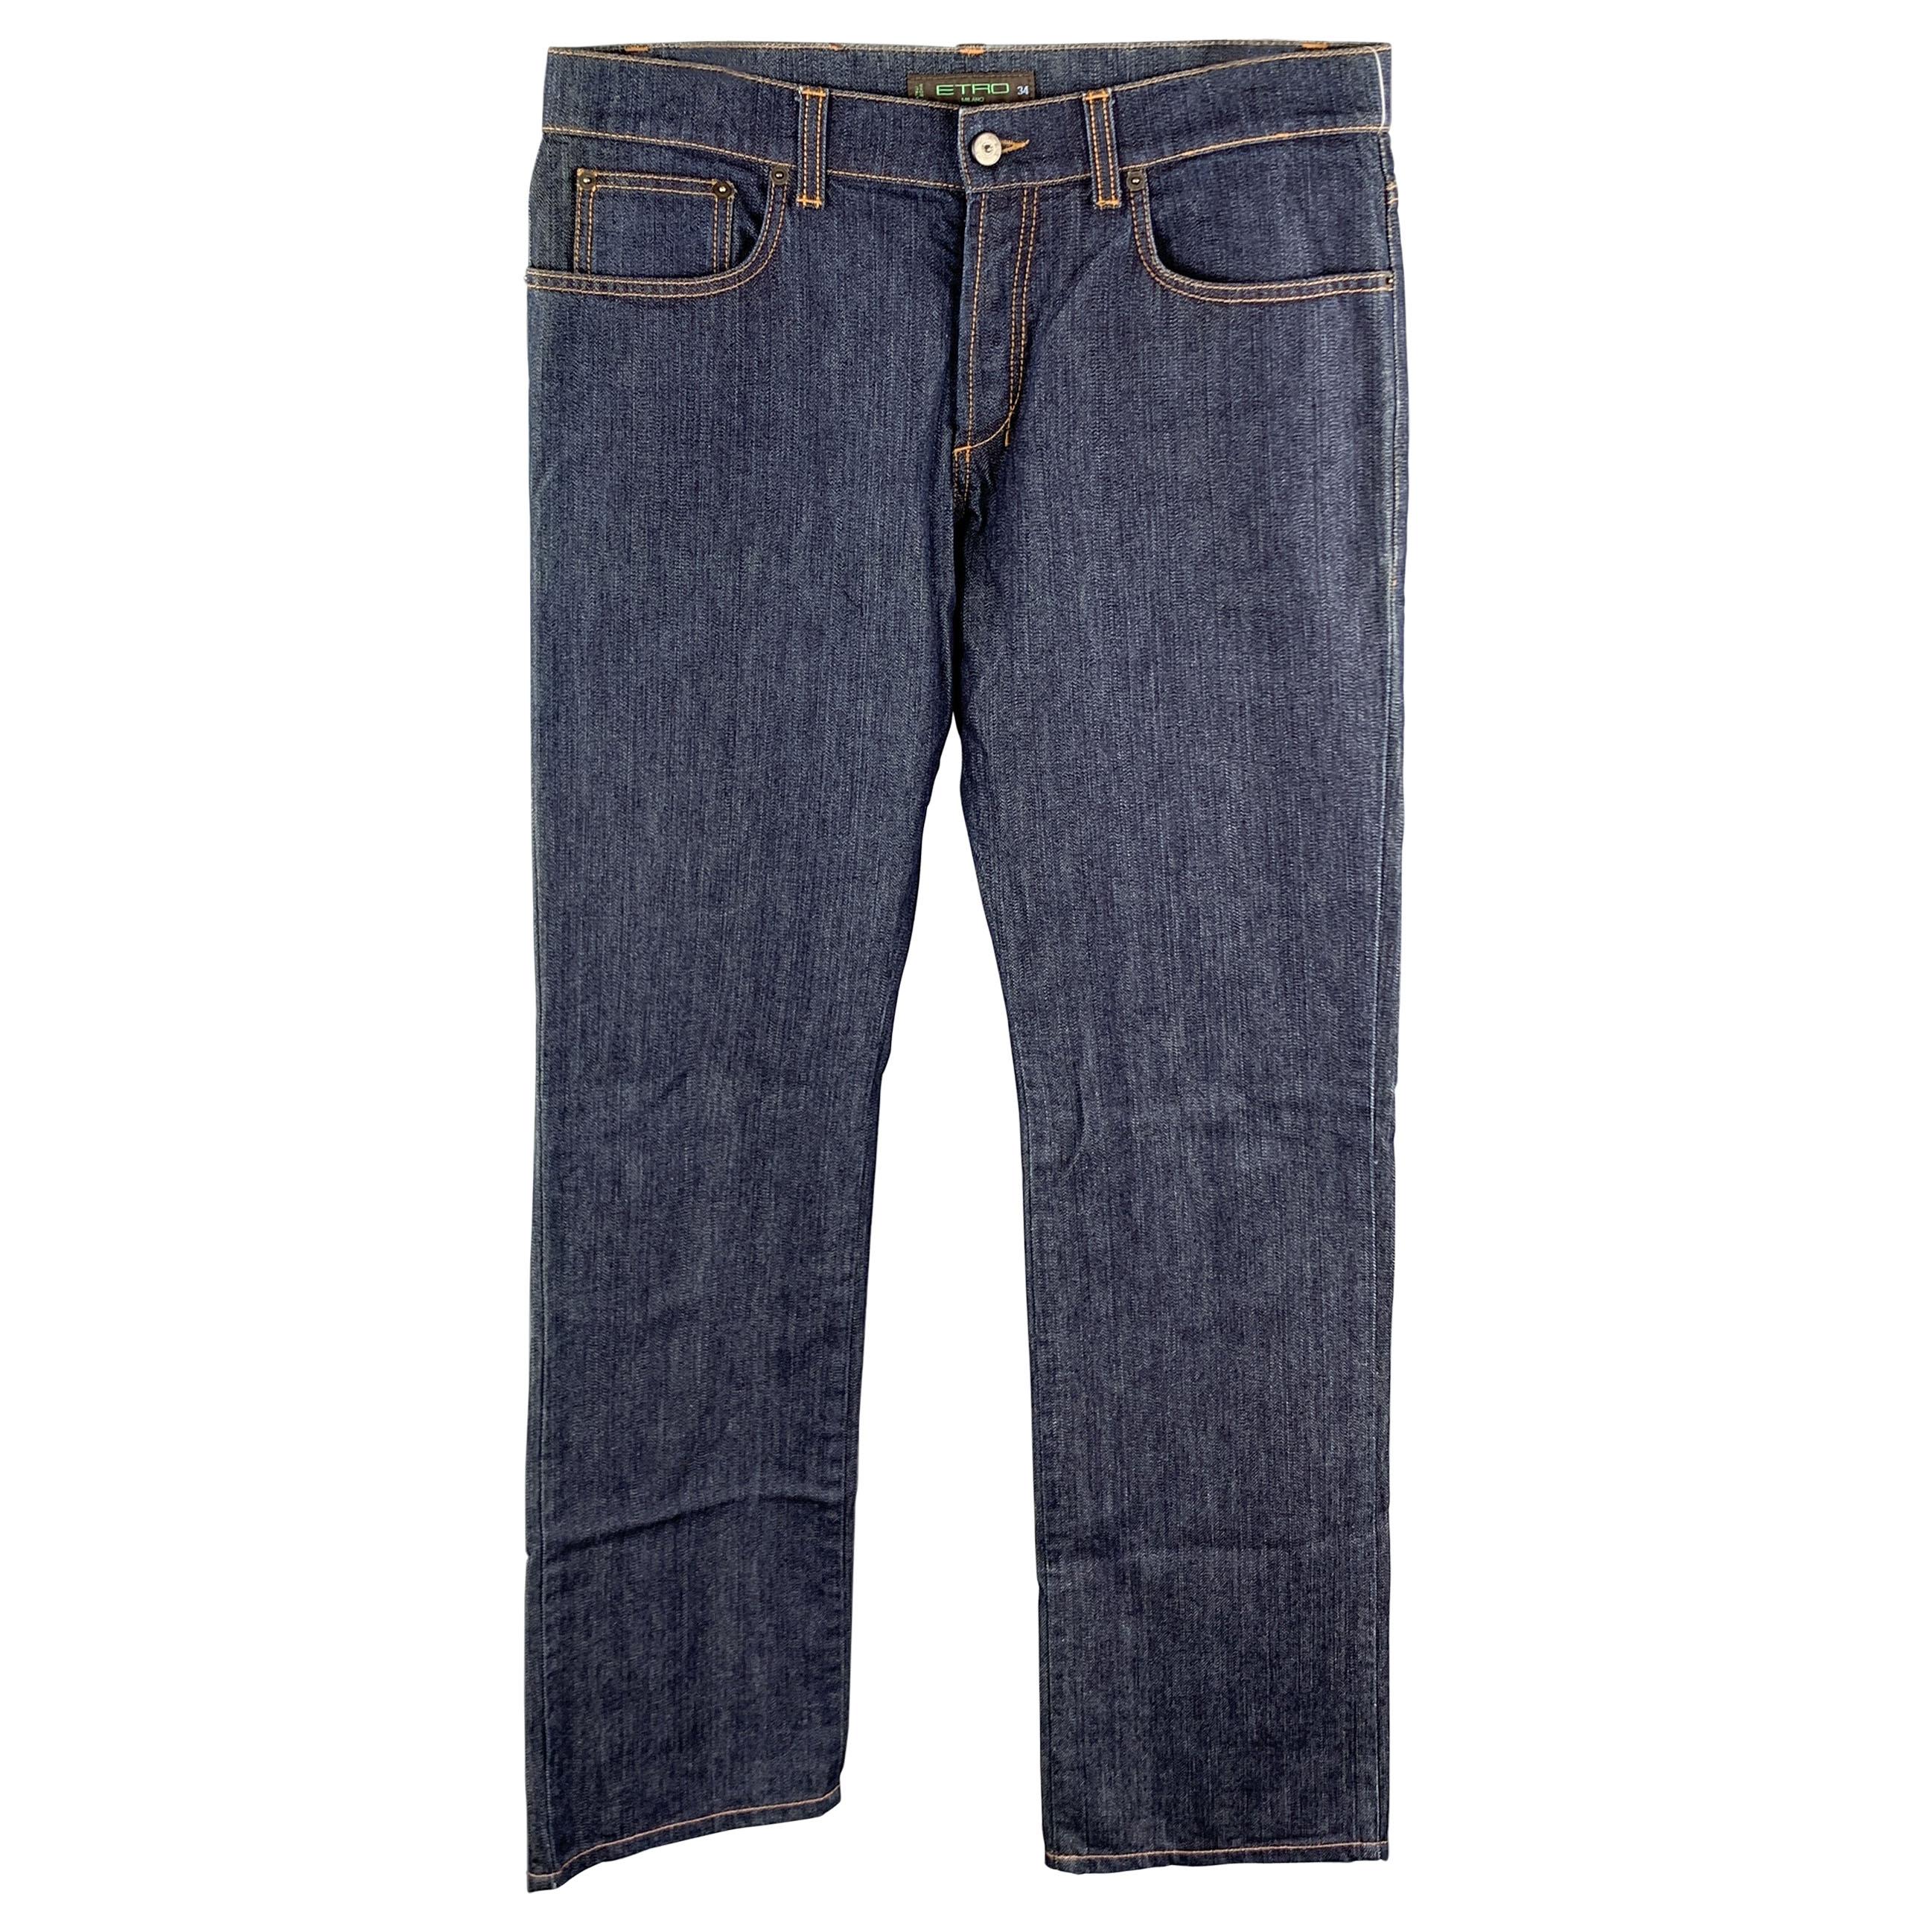 ETRO Size 34 Indigo Contrast Stitch Denim Button Fly Jeans